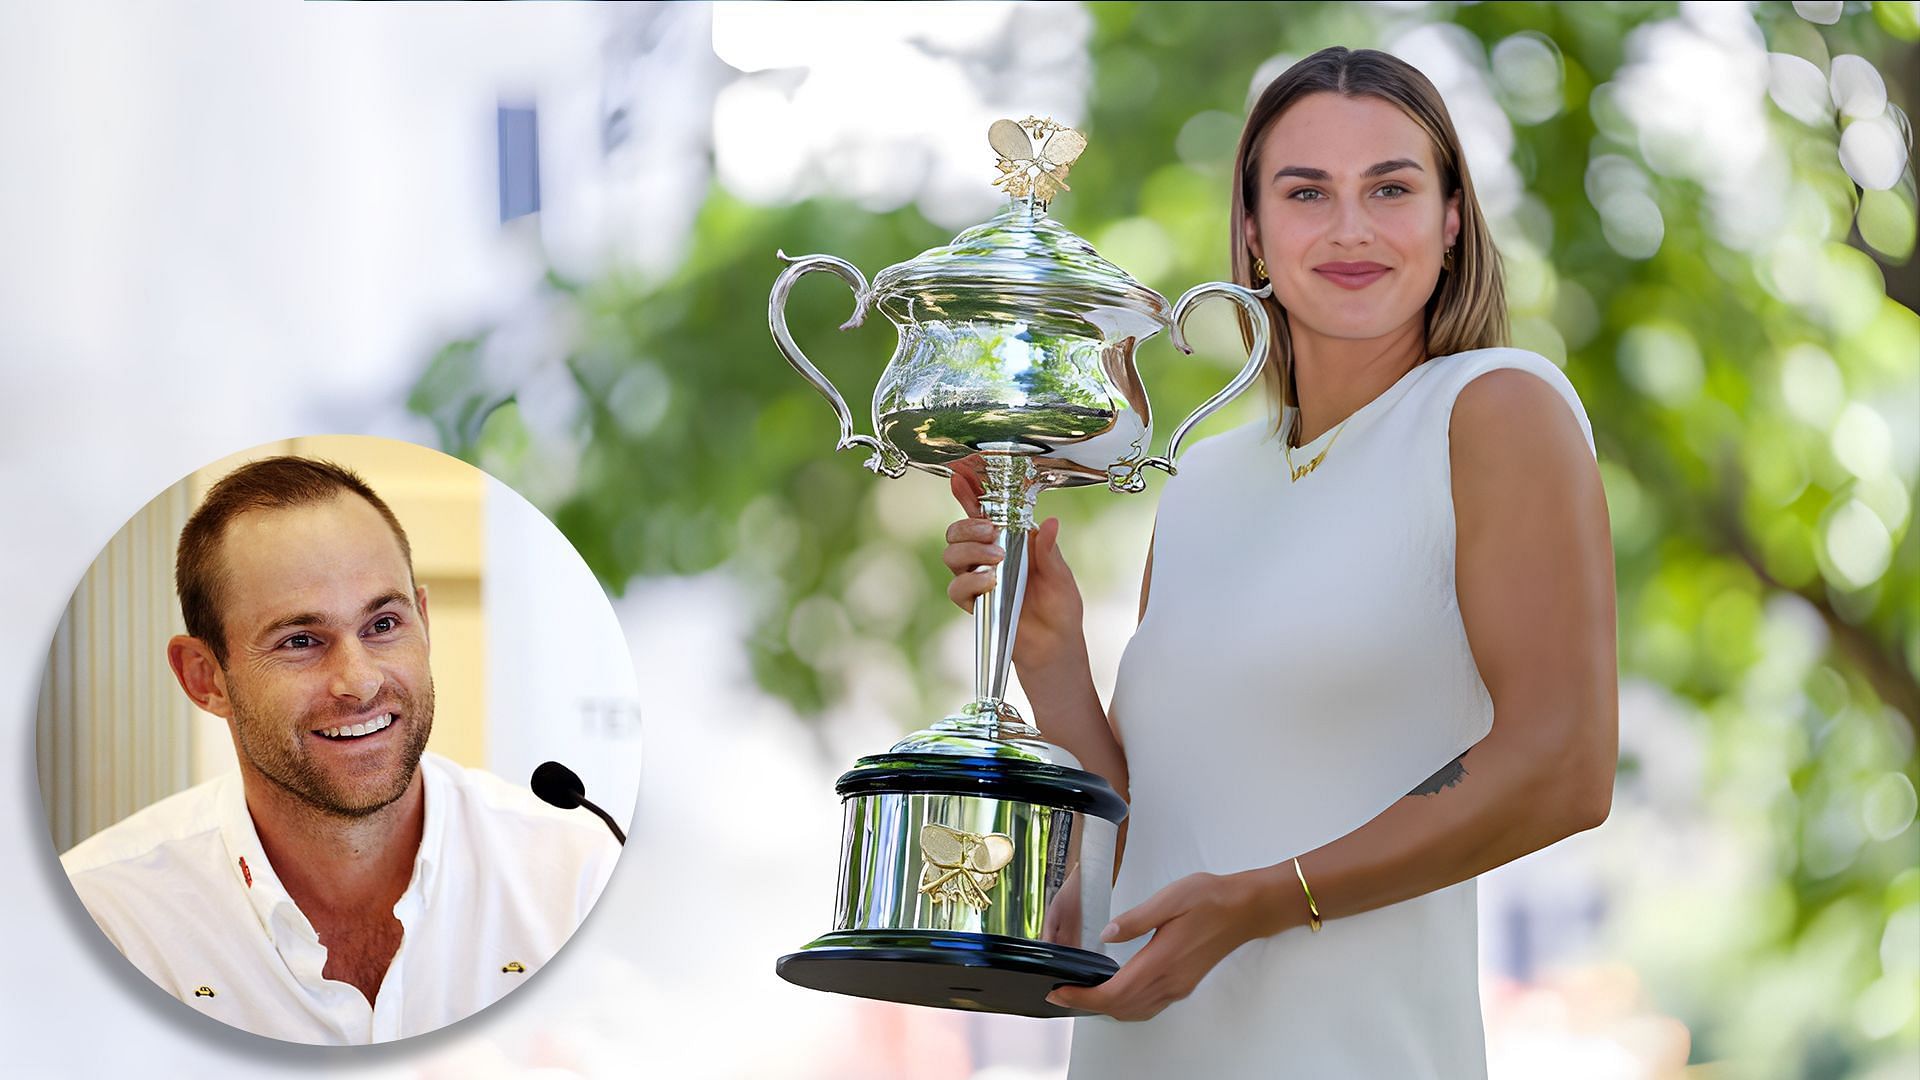 Andy Roddick heaps praises on Aryna Sabalenka for her remarkable consistency.